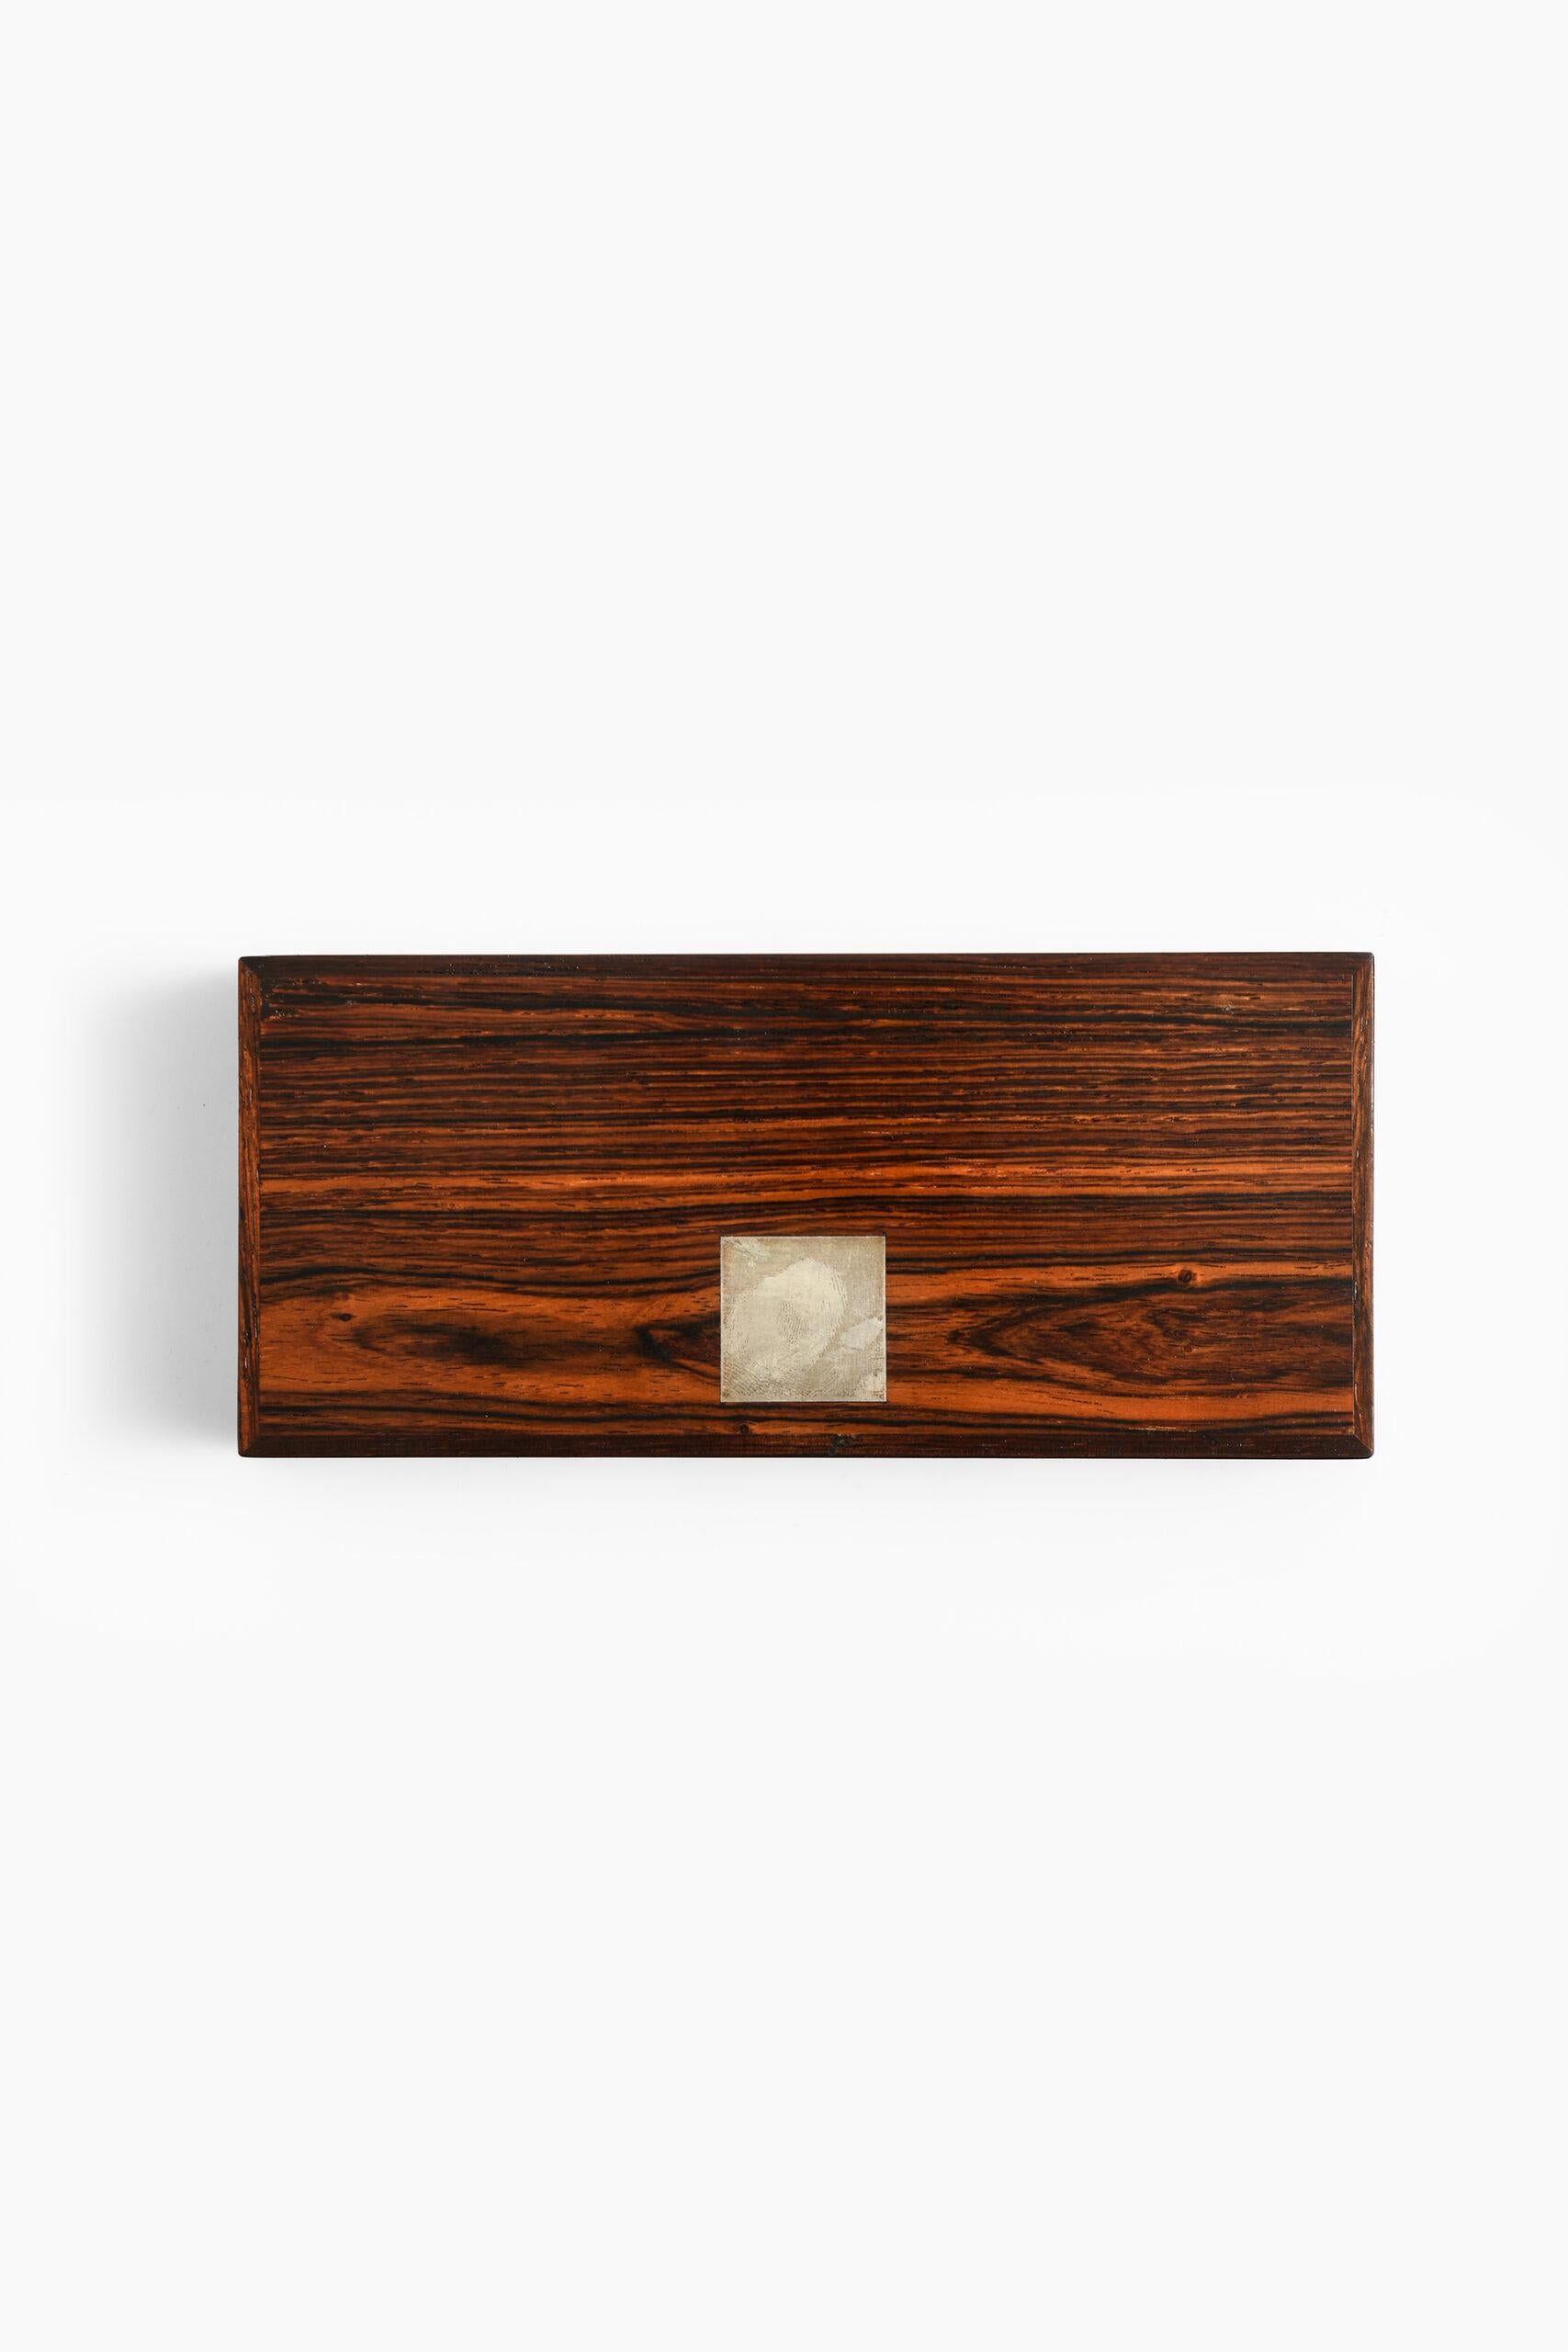 Rare decorative box designed by Hans Hansen. Produced in Denmark.